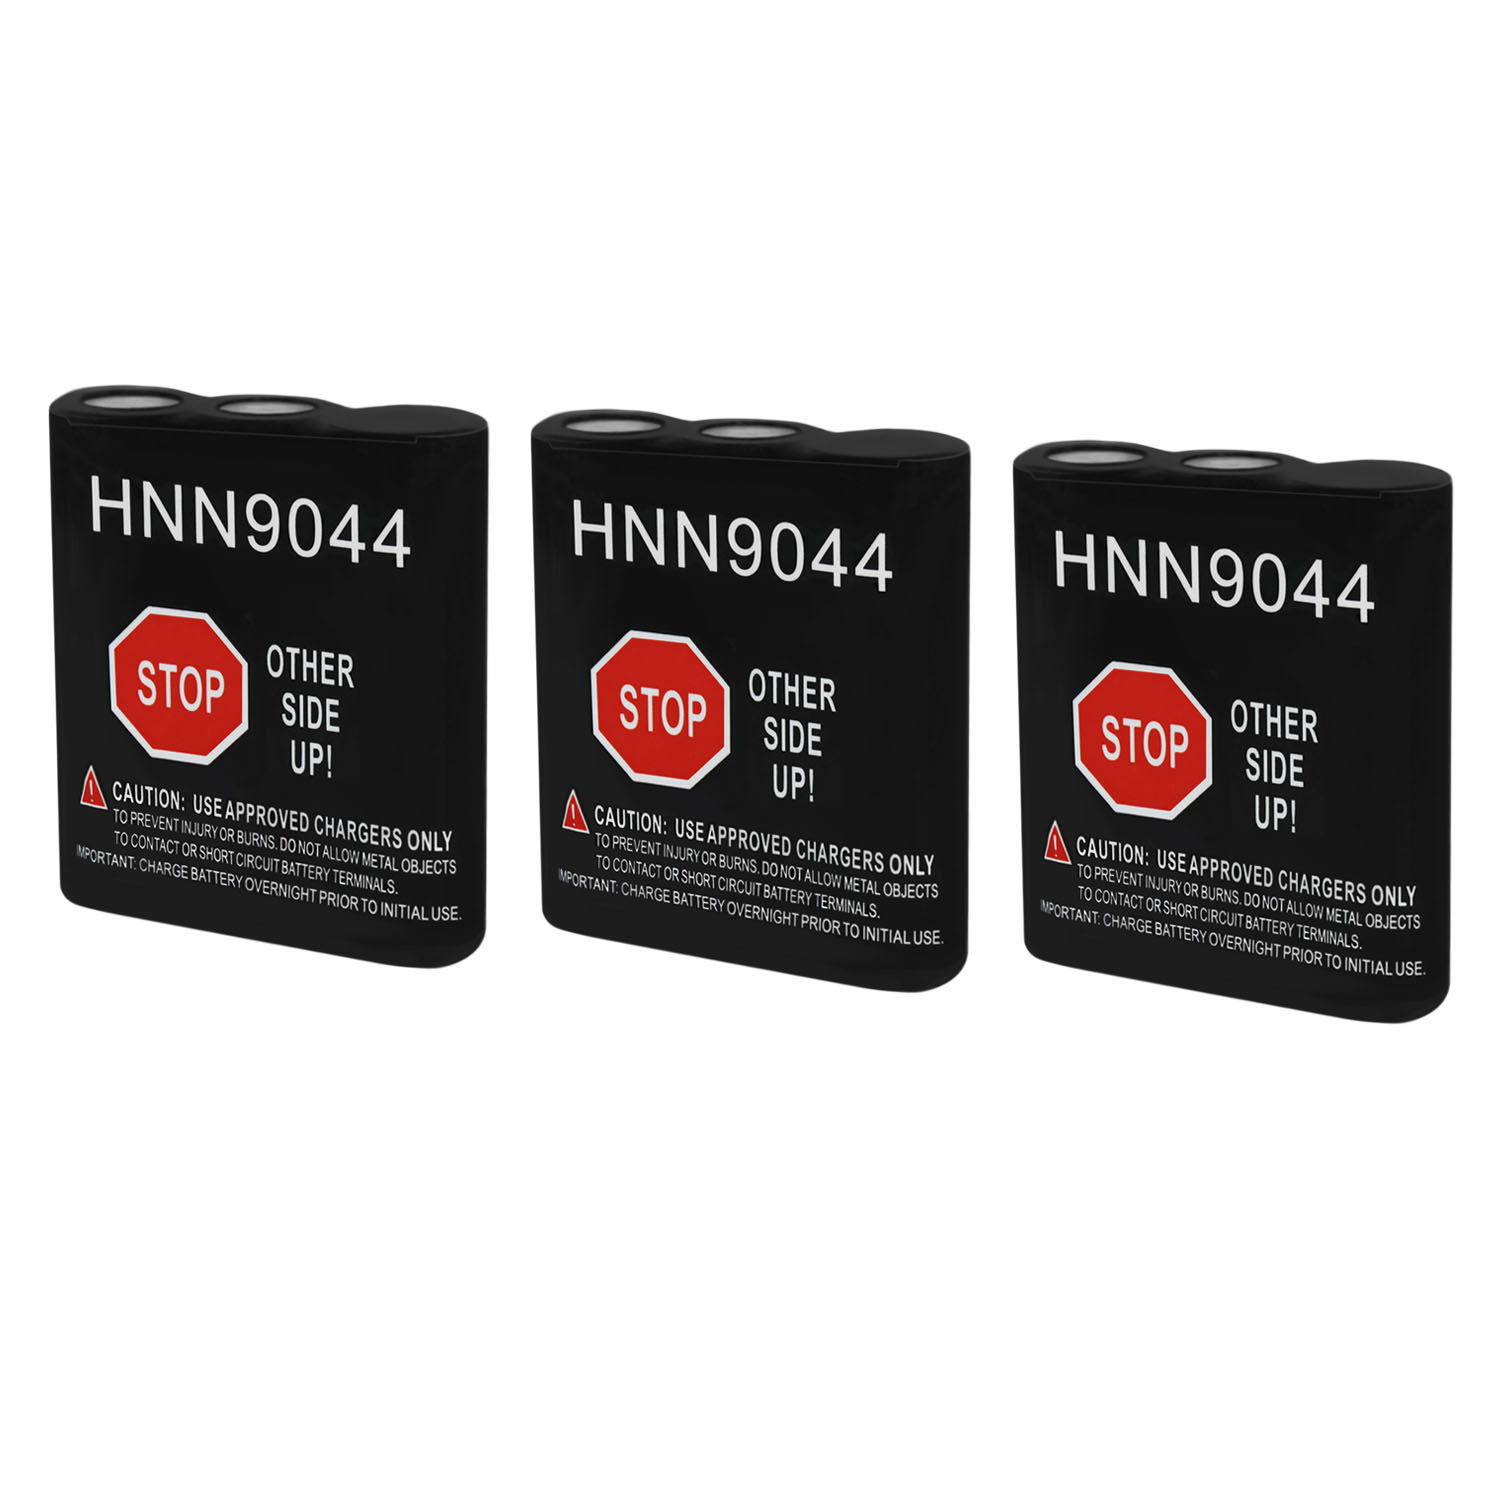 HNN9044 Battery for Motorola Radius 2-Way Radio - 3 Pack